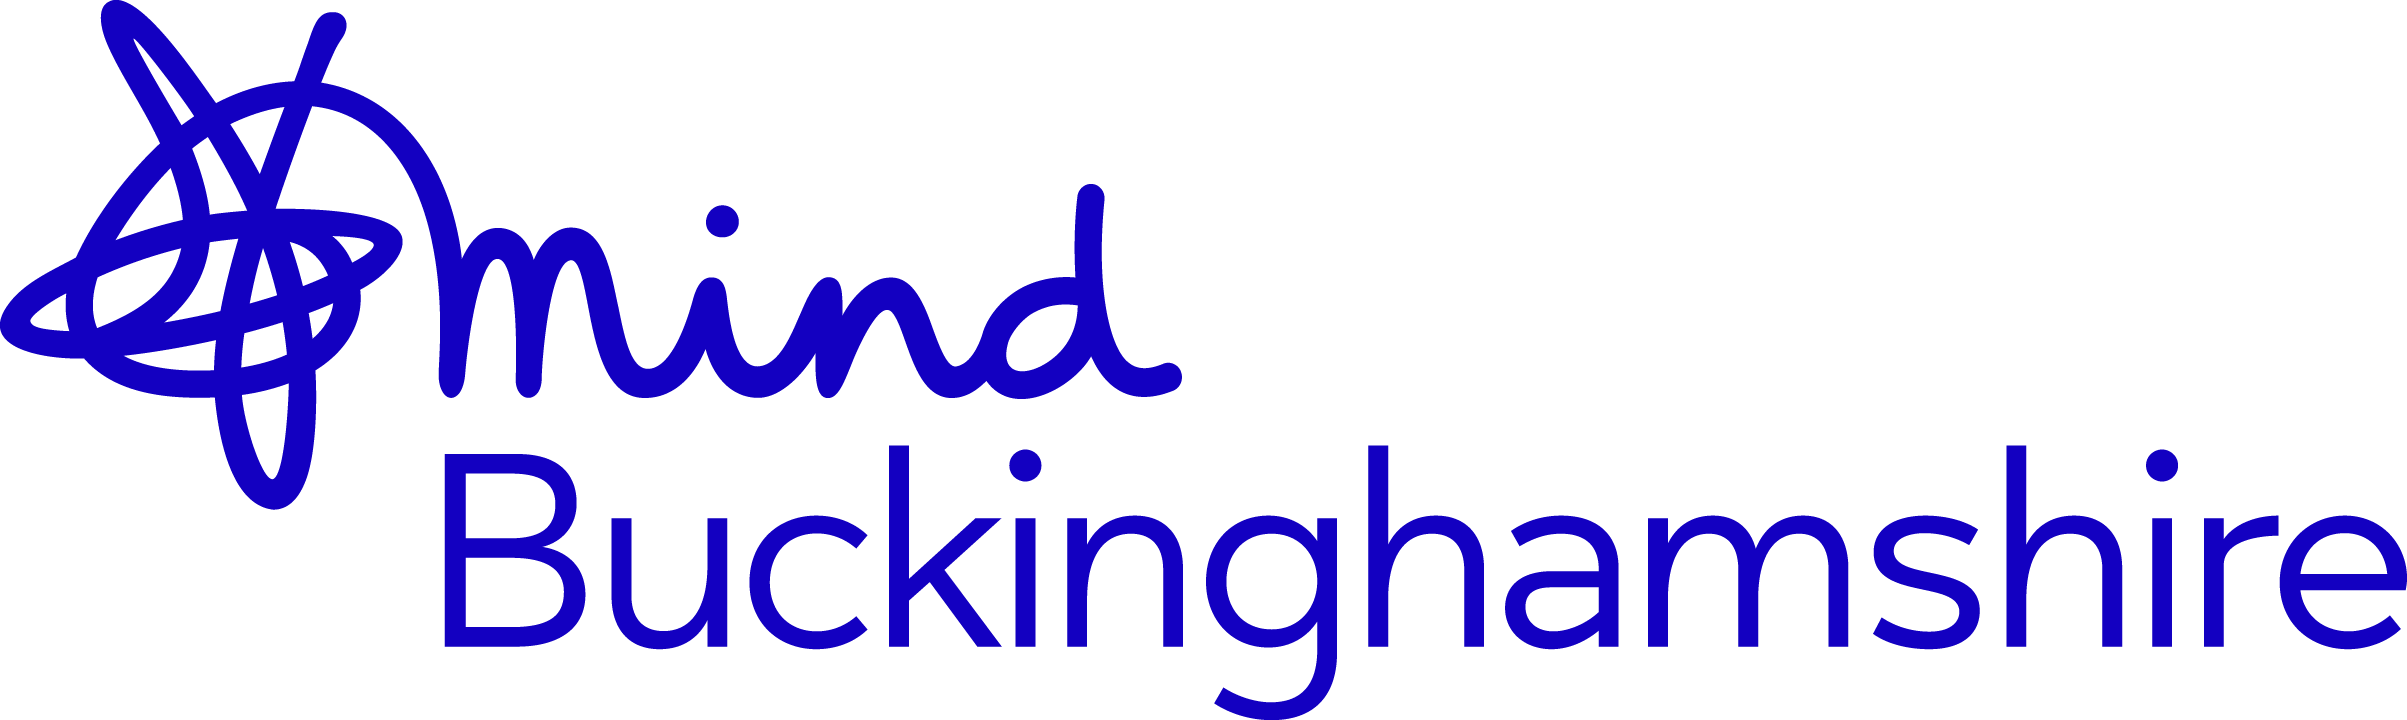 Please Donate to Buckinghamshire Mind